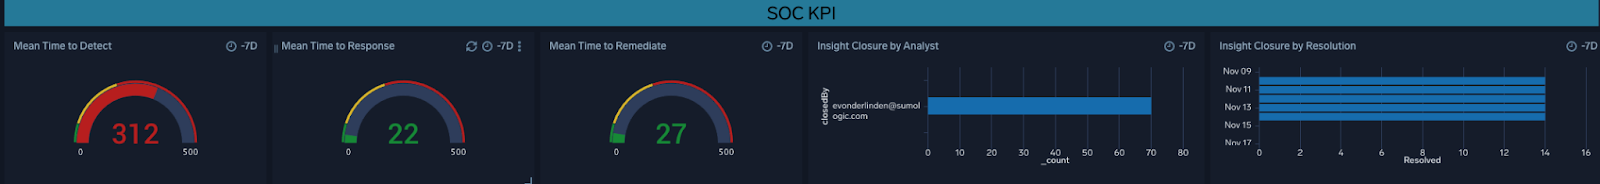 SOC Dashboard SOC KPIs